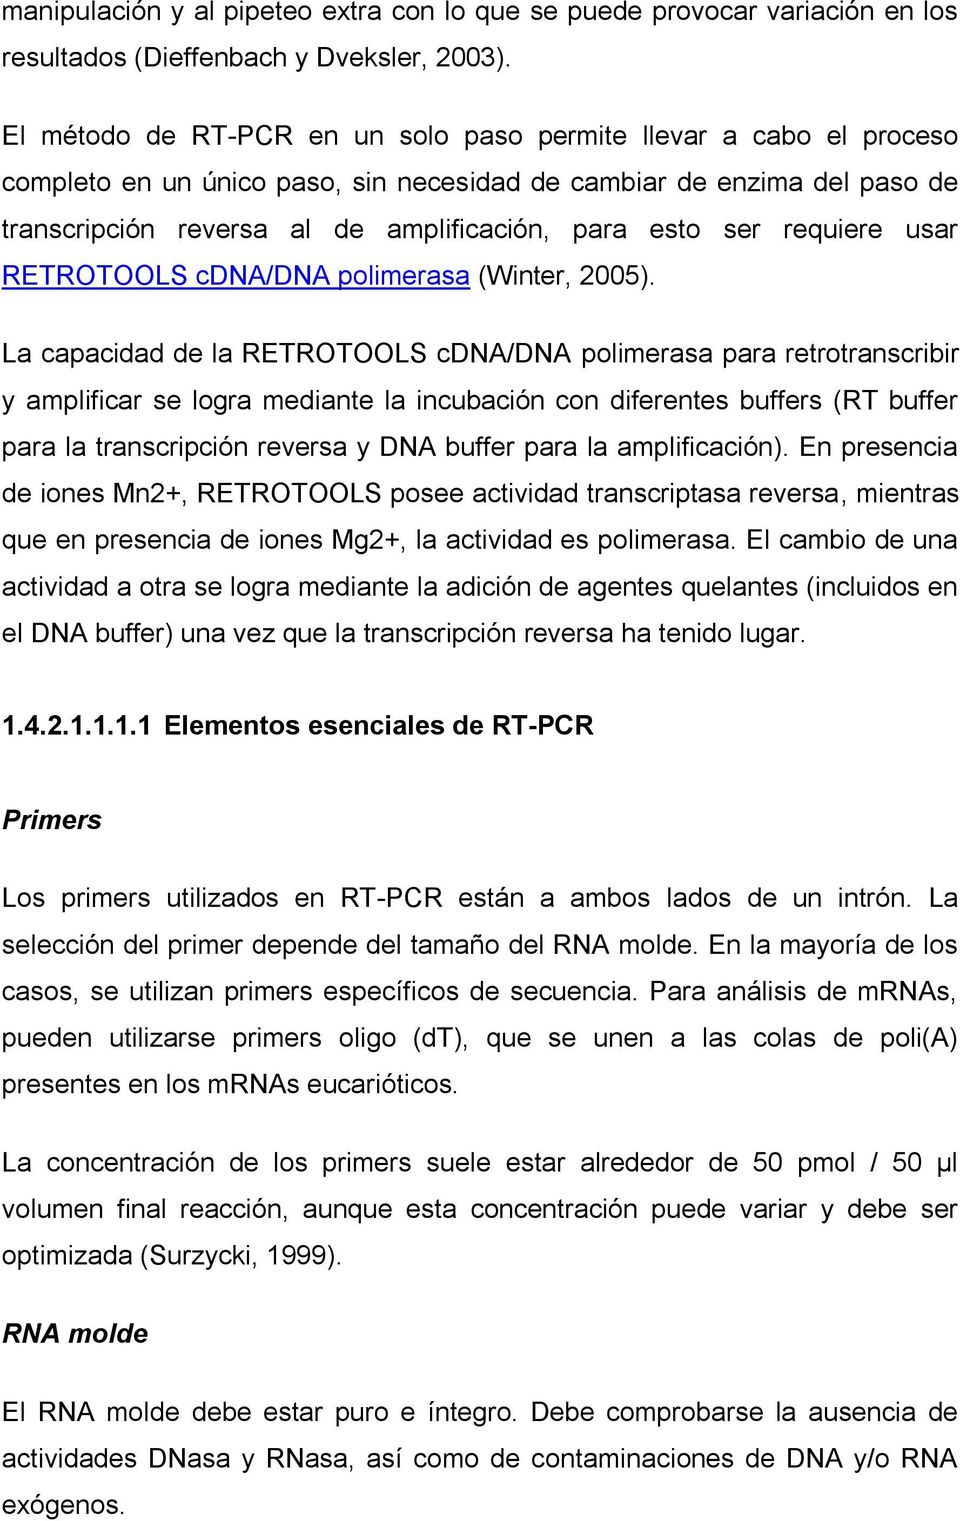 requiere usar RETROTOOLS cdna/dna polimerasa (Winter, 2005).